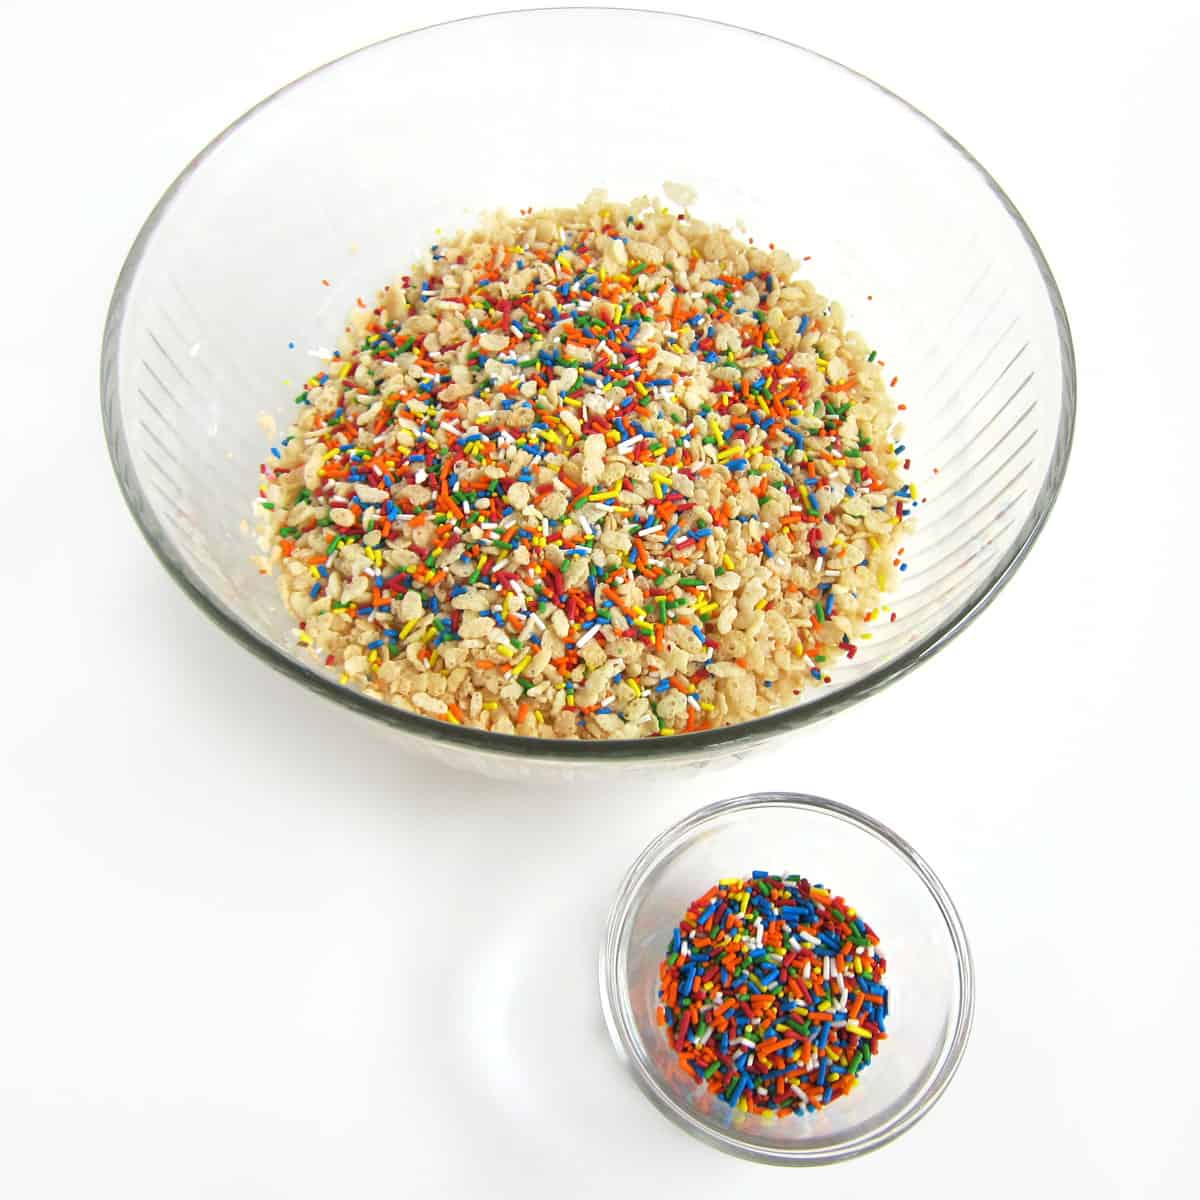 bowl of Rice Krispies cereal with rainbow sprinkles